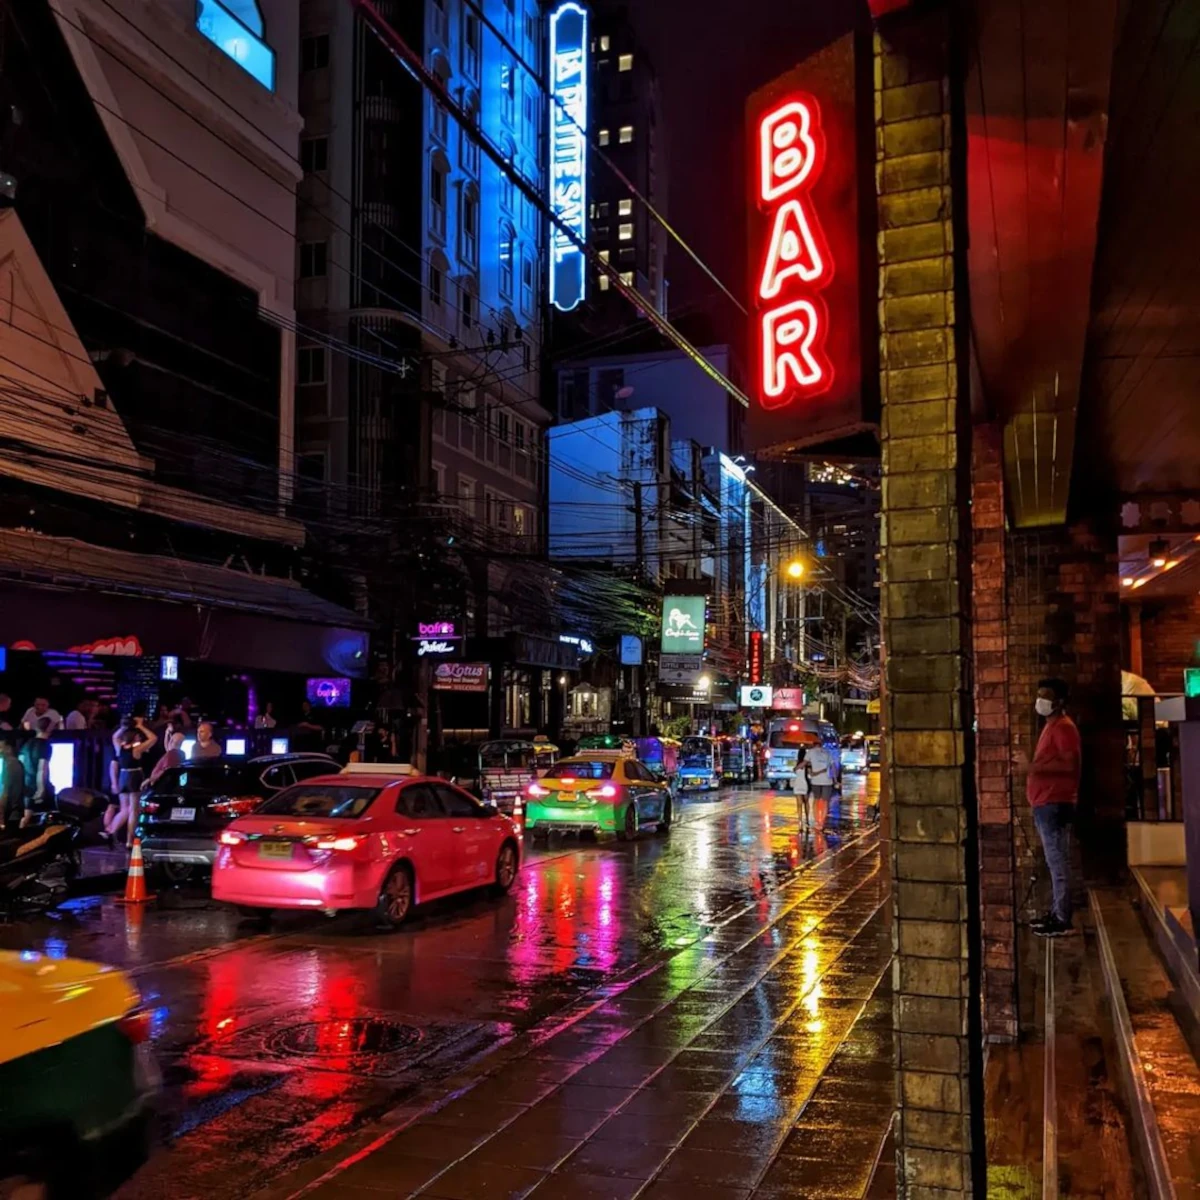 Colorful bar sign on Sukhumvit Soi 11, Bangkok, a popular nightlife street.